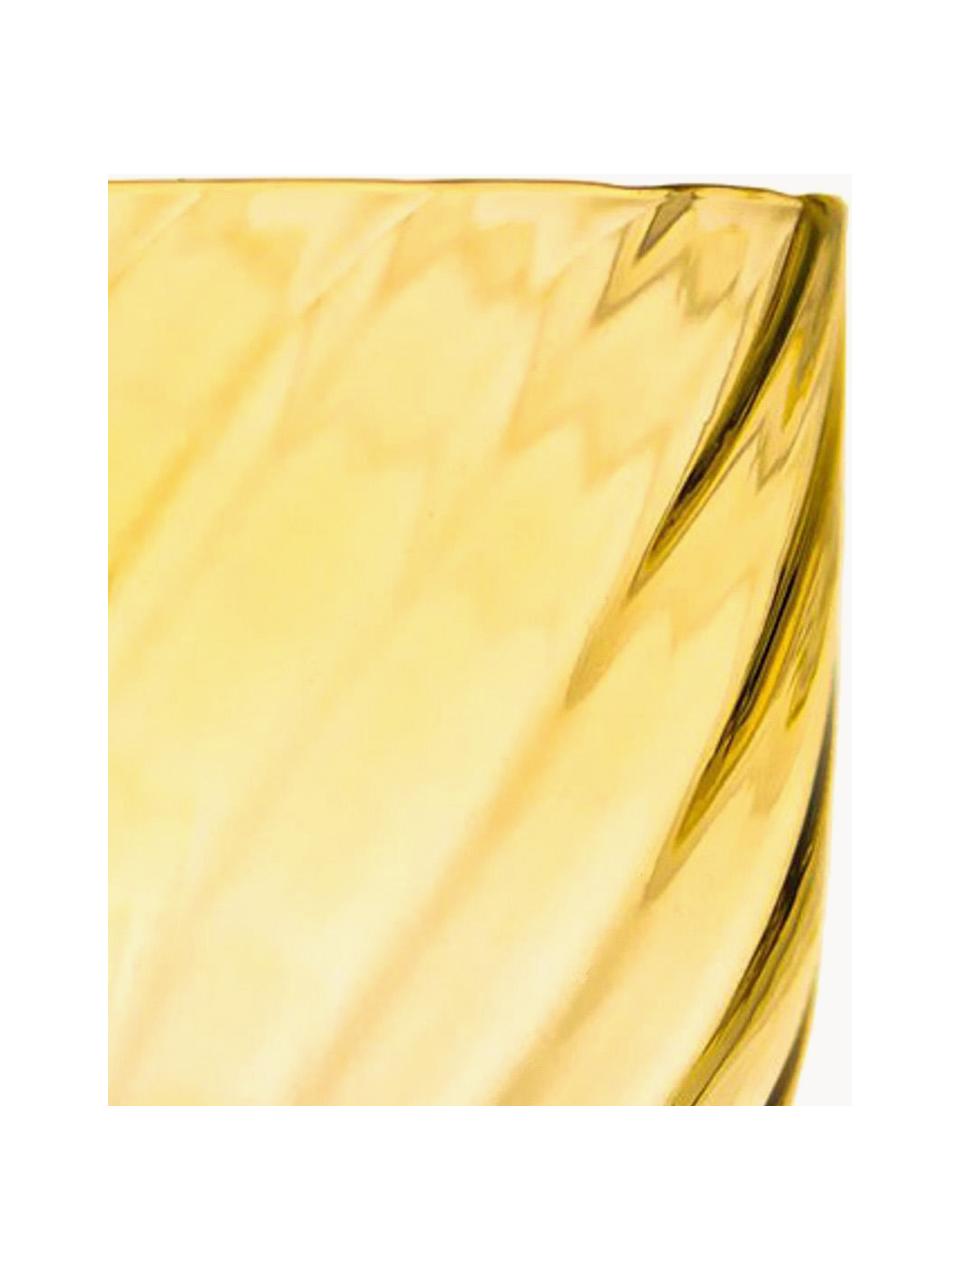 Mondgeblazen waterglazen Swirl, 6 stuks, Glas, Citroengeel, Ø 7 x H 10 cm, 250 ml